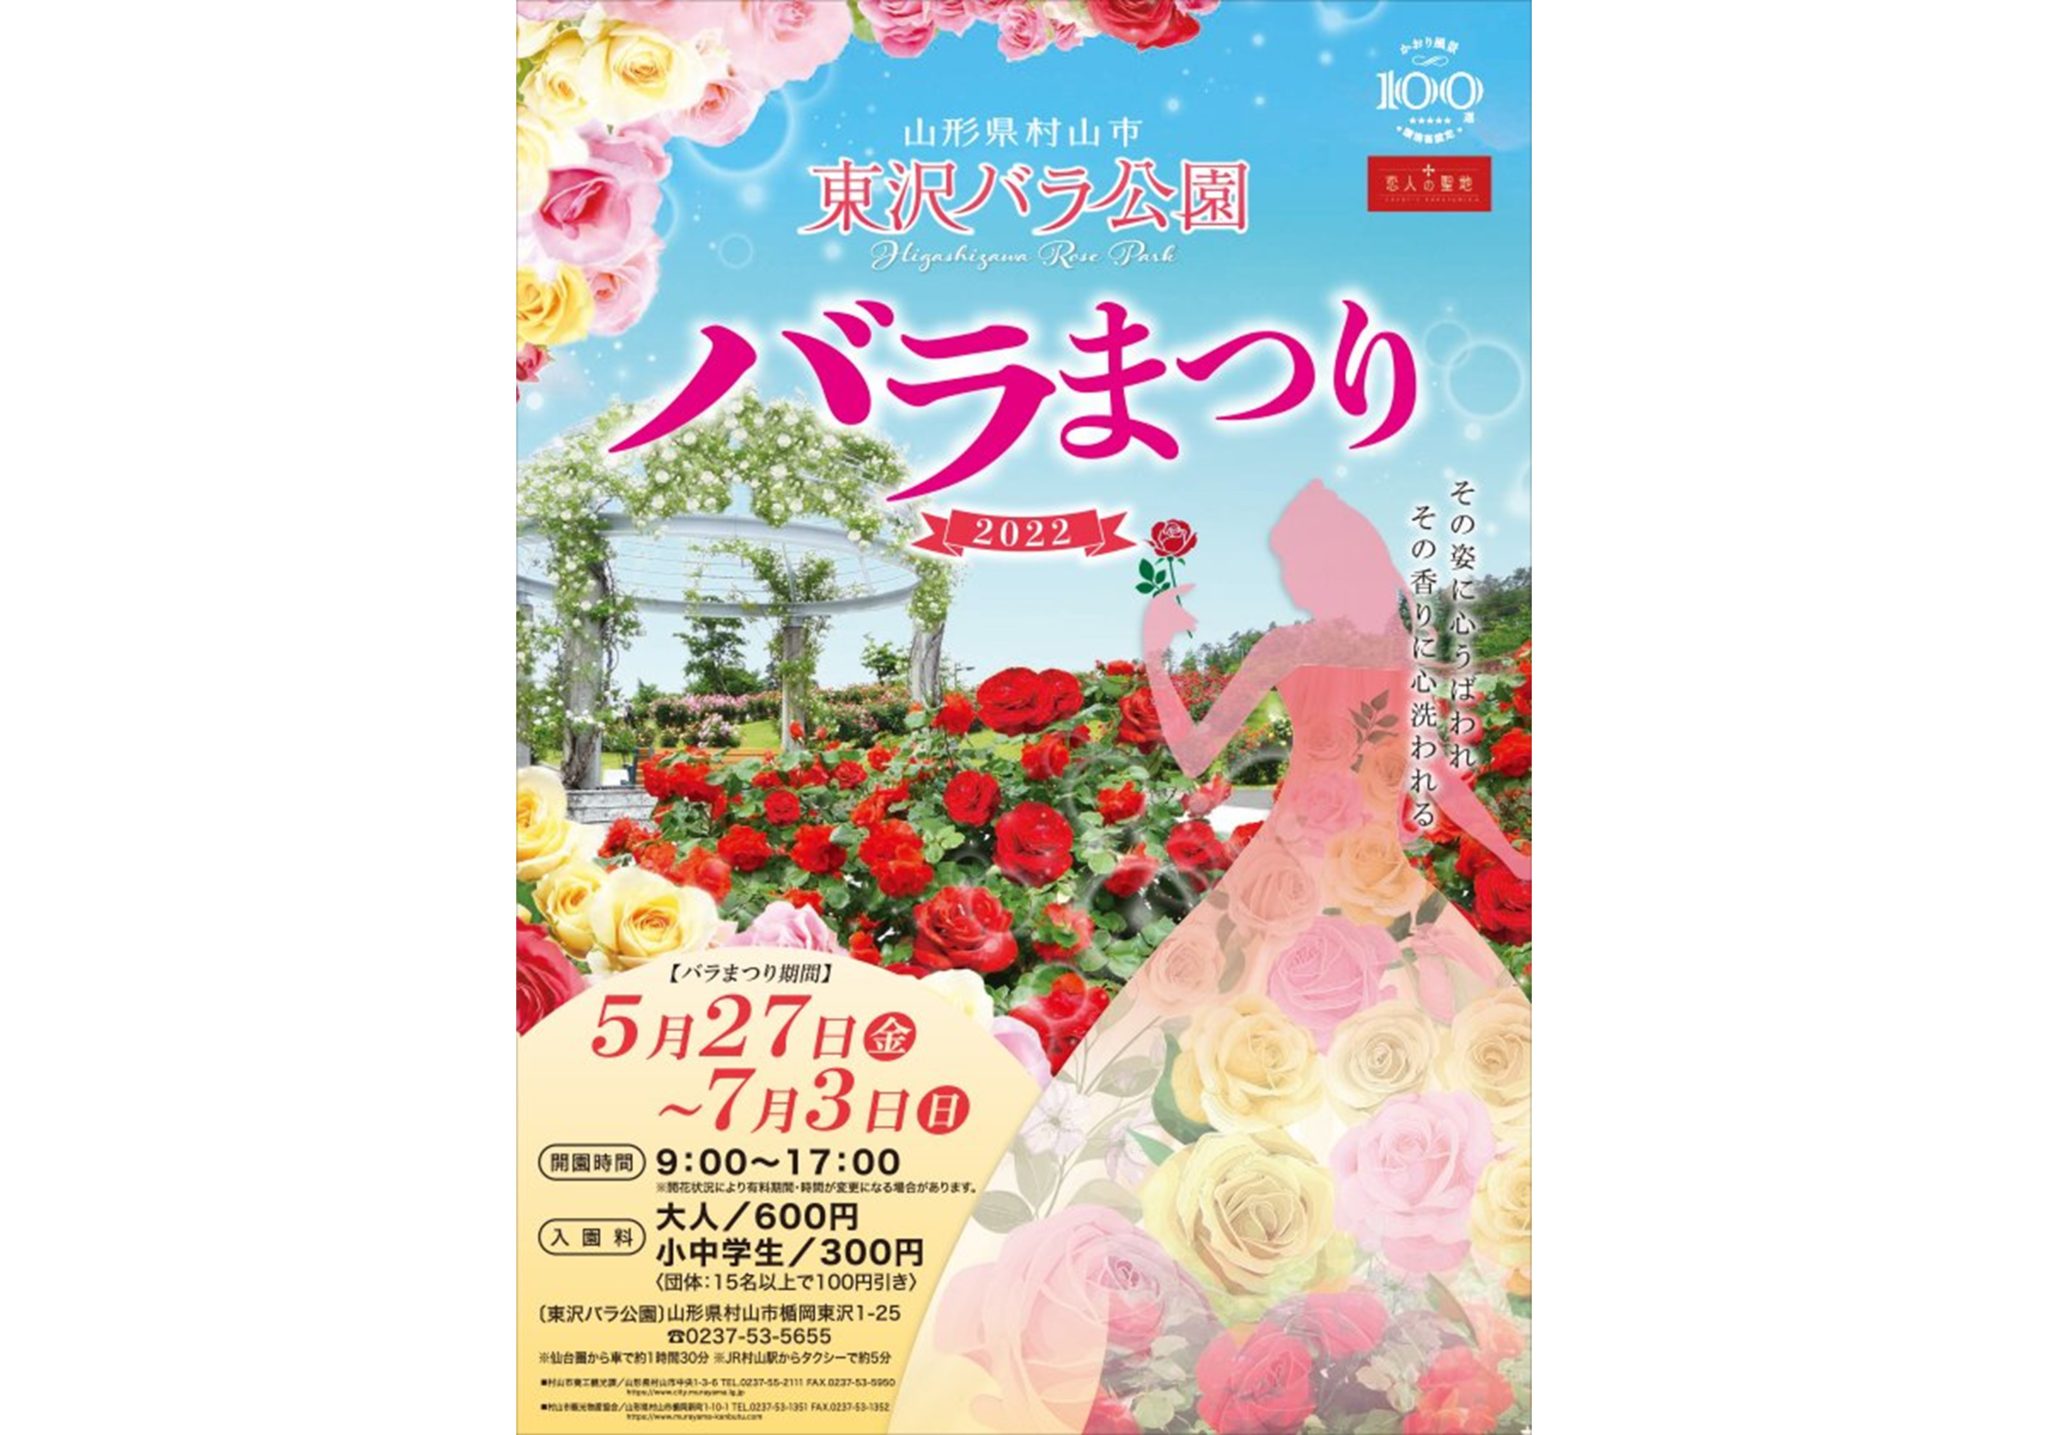 Higashizawa Rose Park Festival 2022